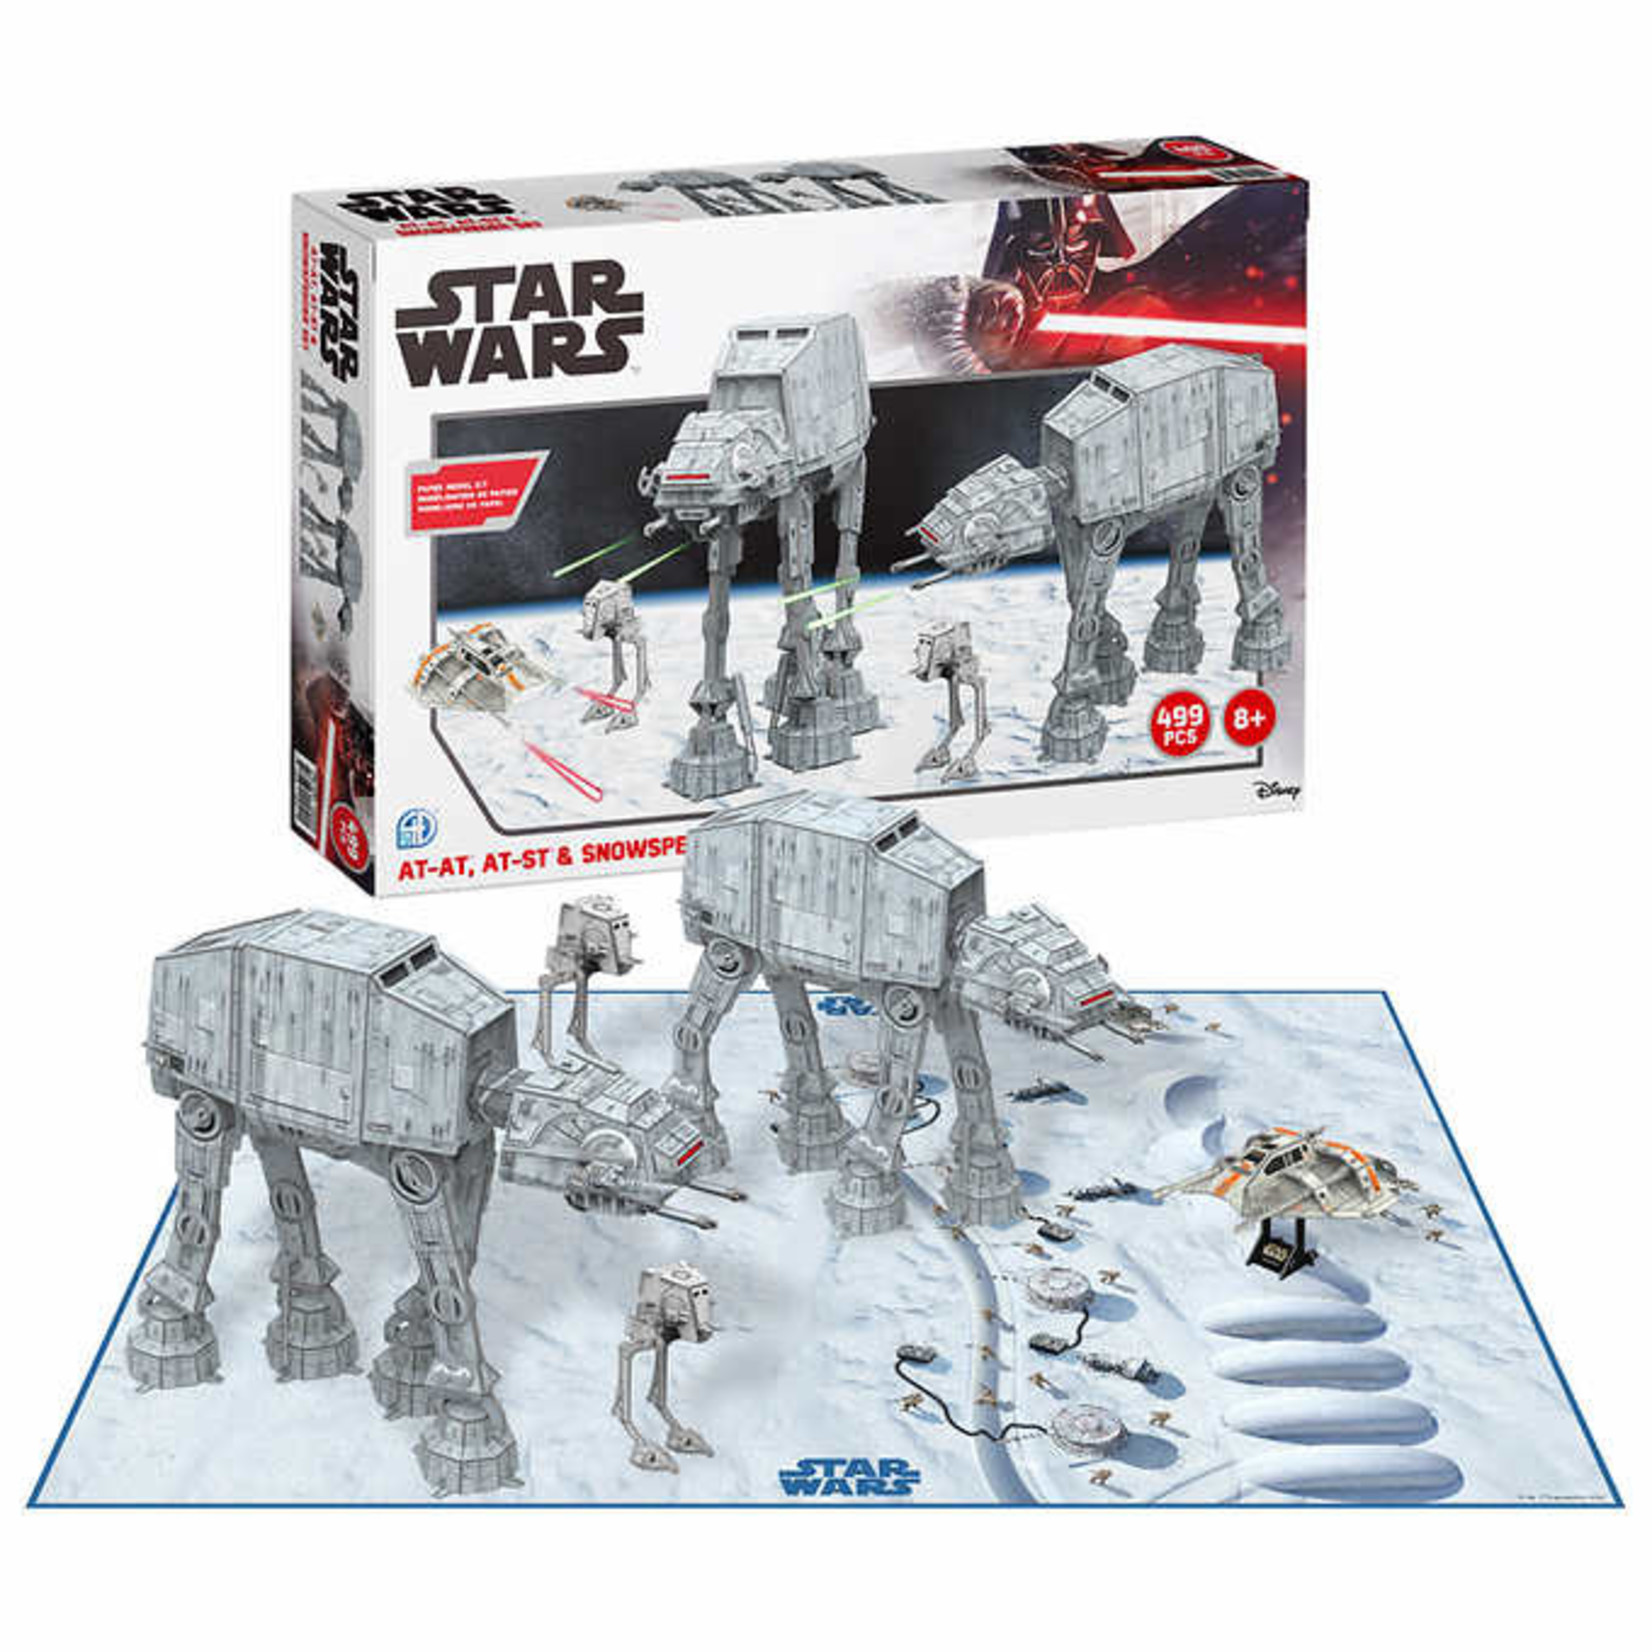 4D brand Star Wars AT-AT, AT-ST, Snowspeeder Model Set Multi Pack Set